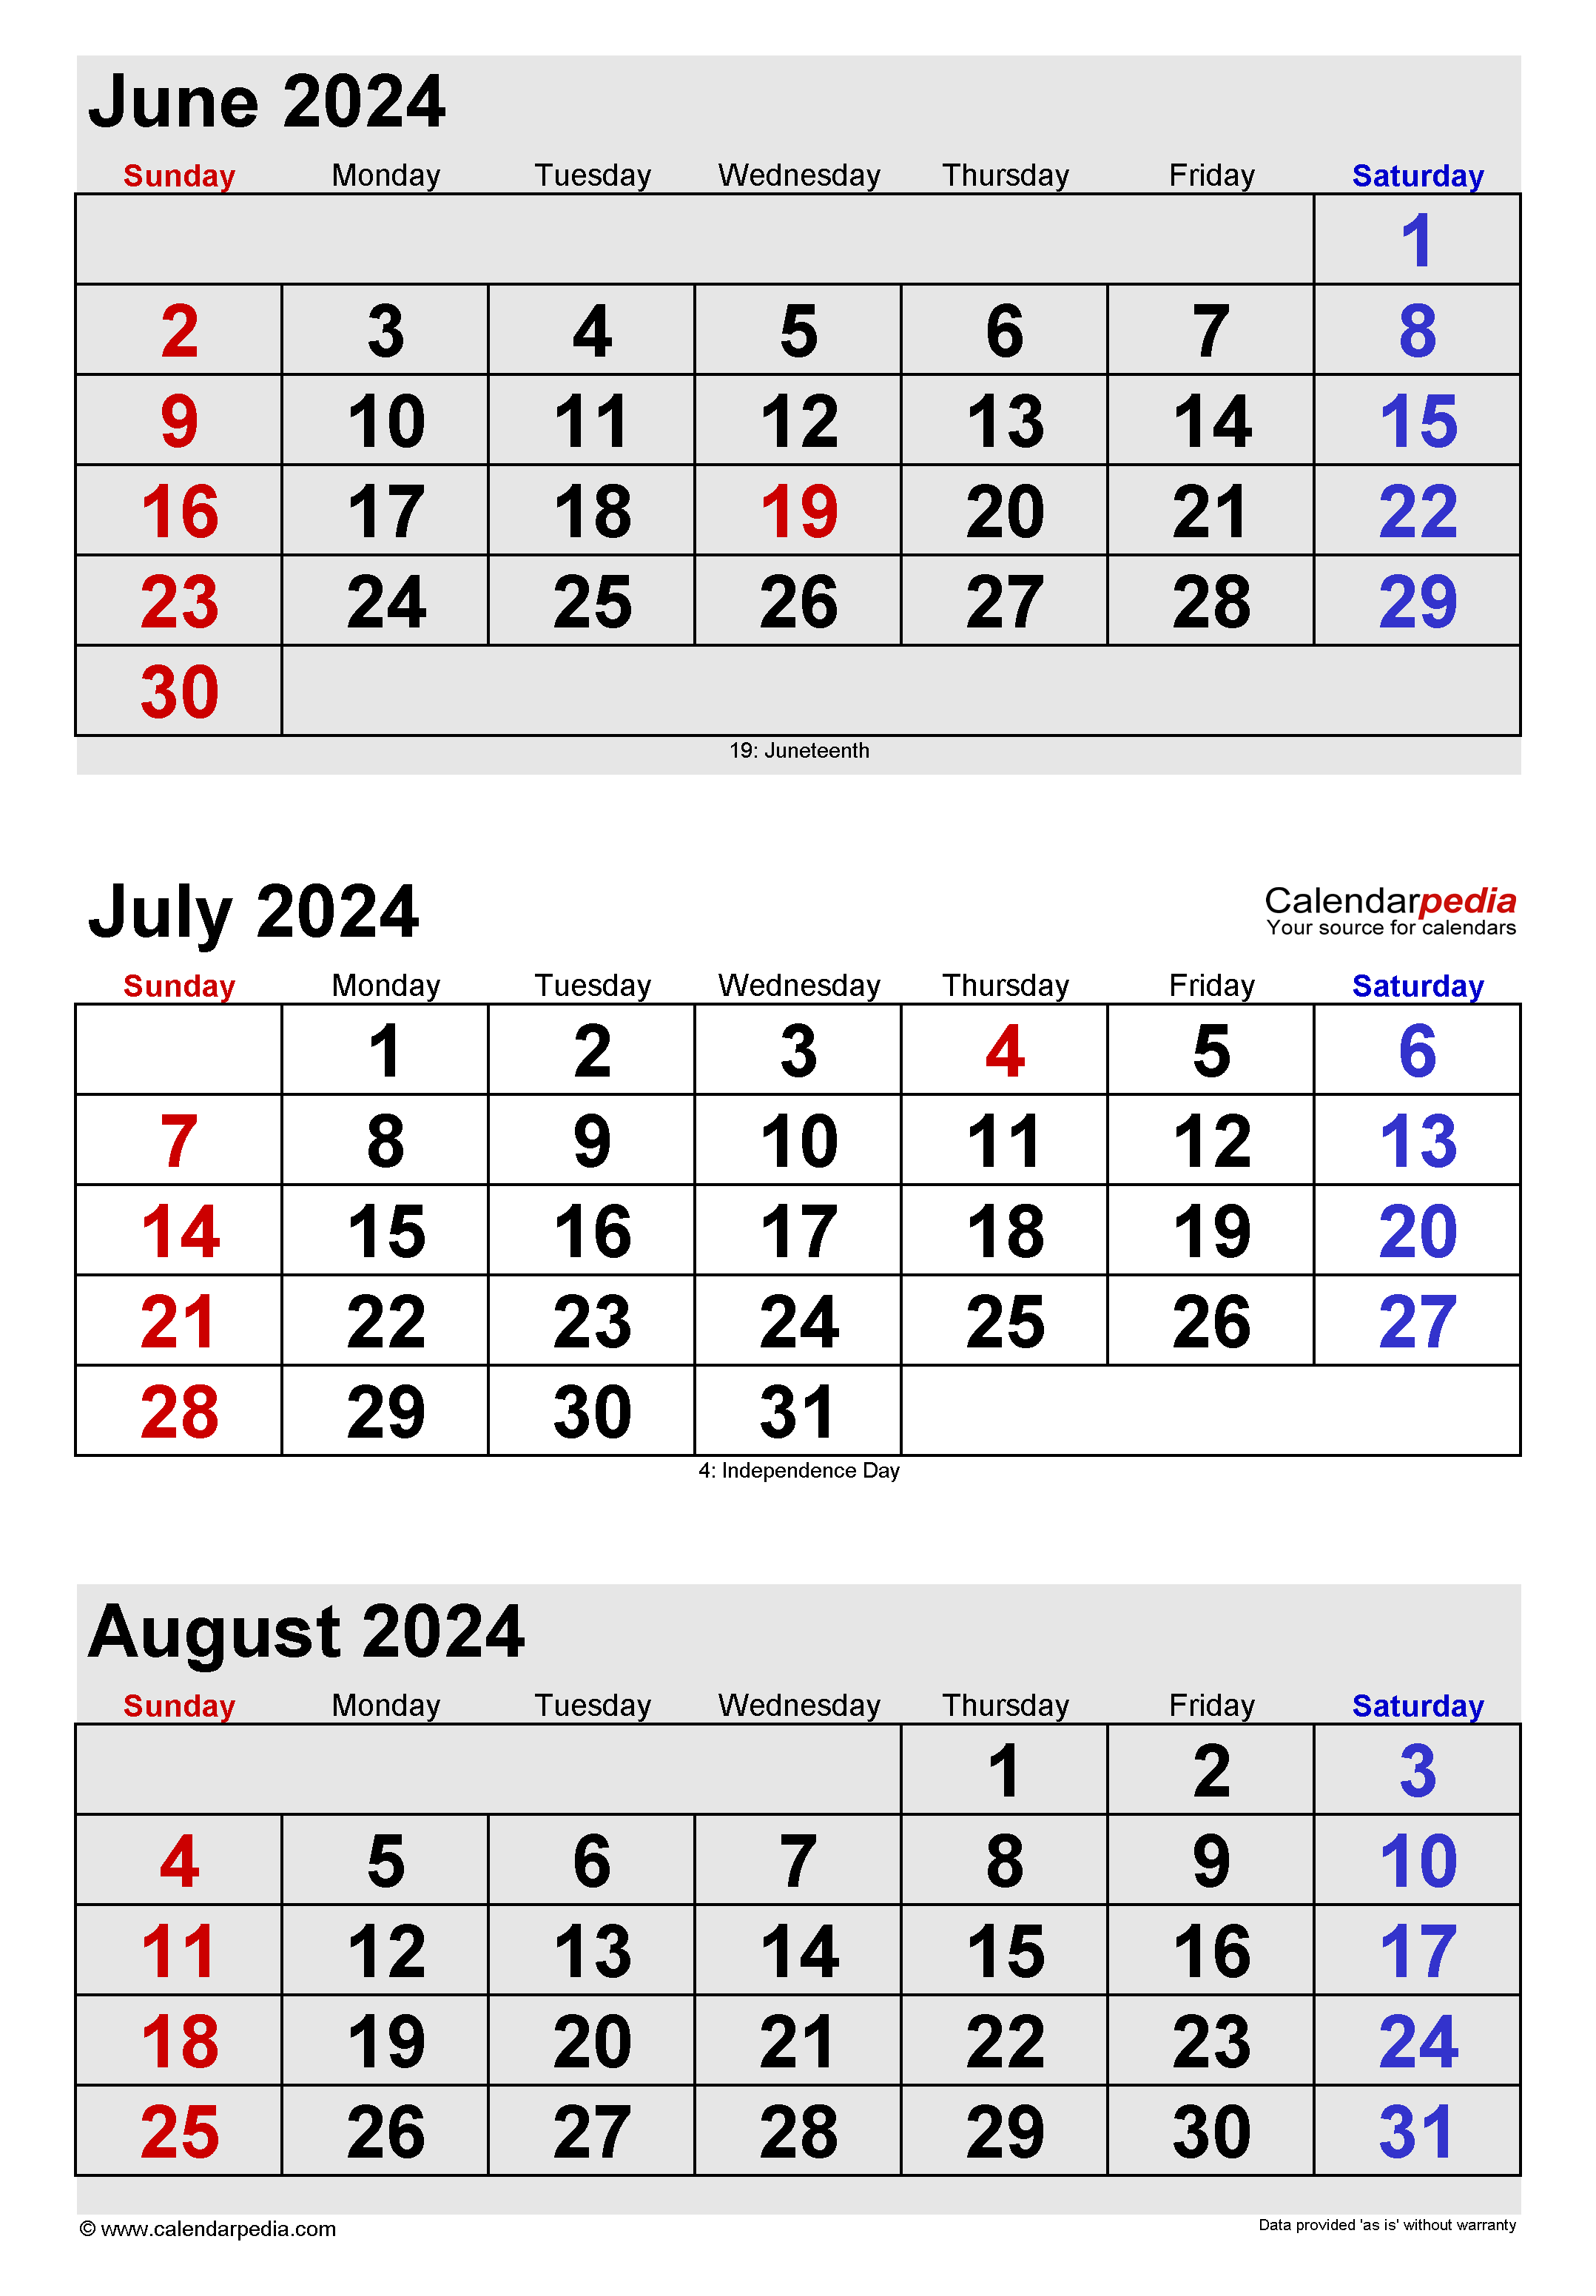 August 2024 July 2024 Calendar Printable 2024 CALENDAR PRINTABLE - Free Printable 3 Month Calendar 2024 July August September 2024